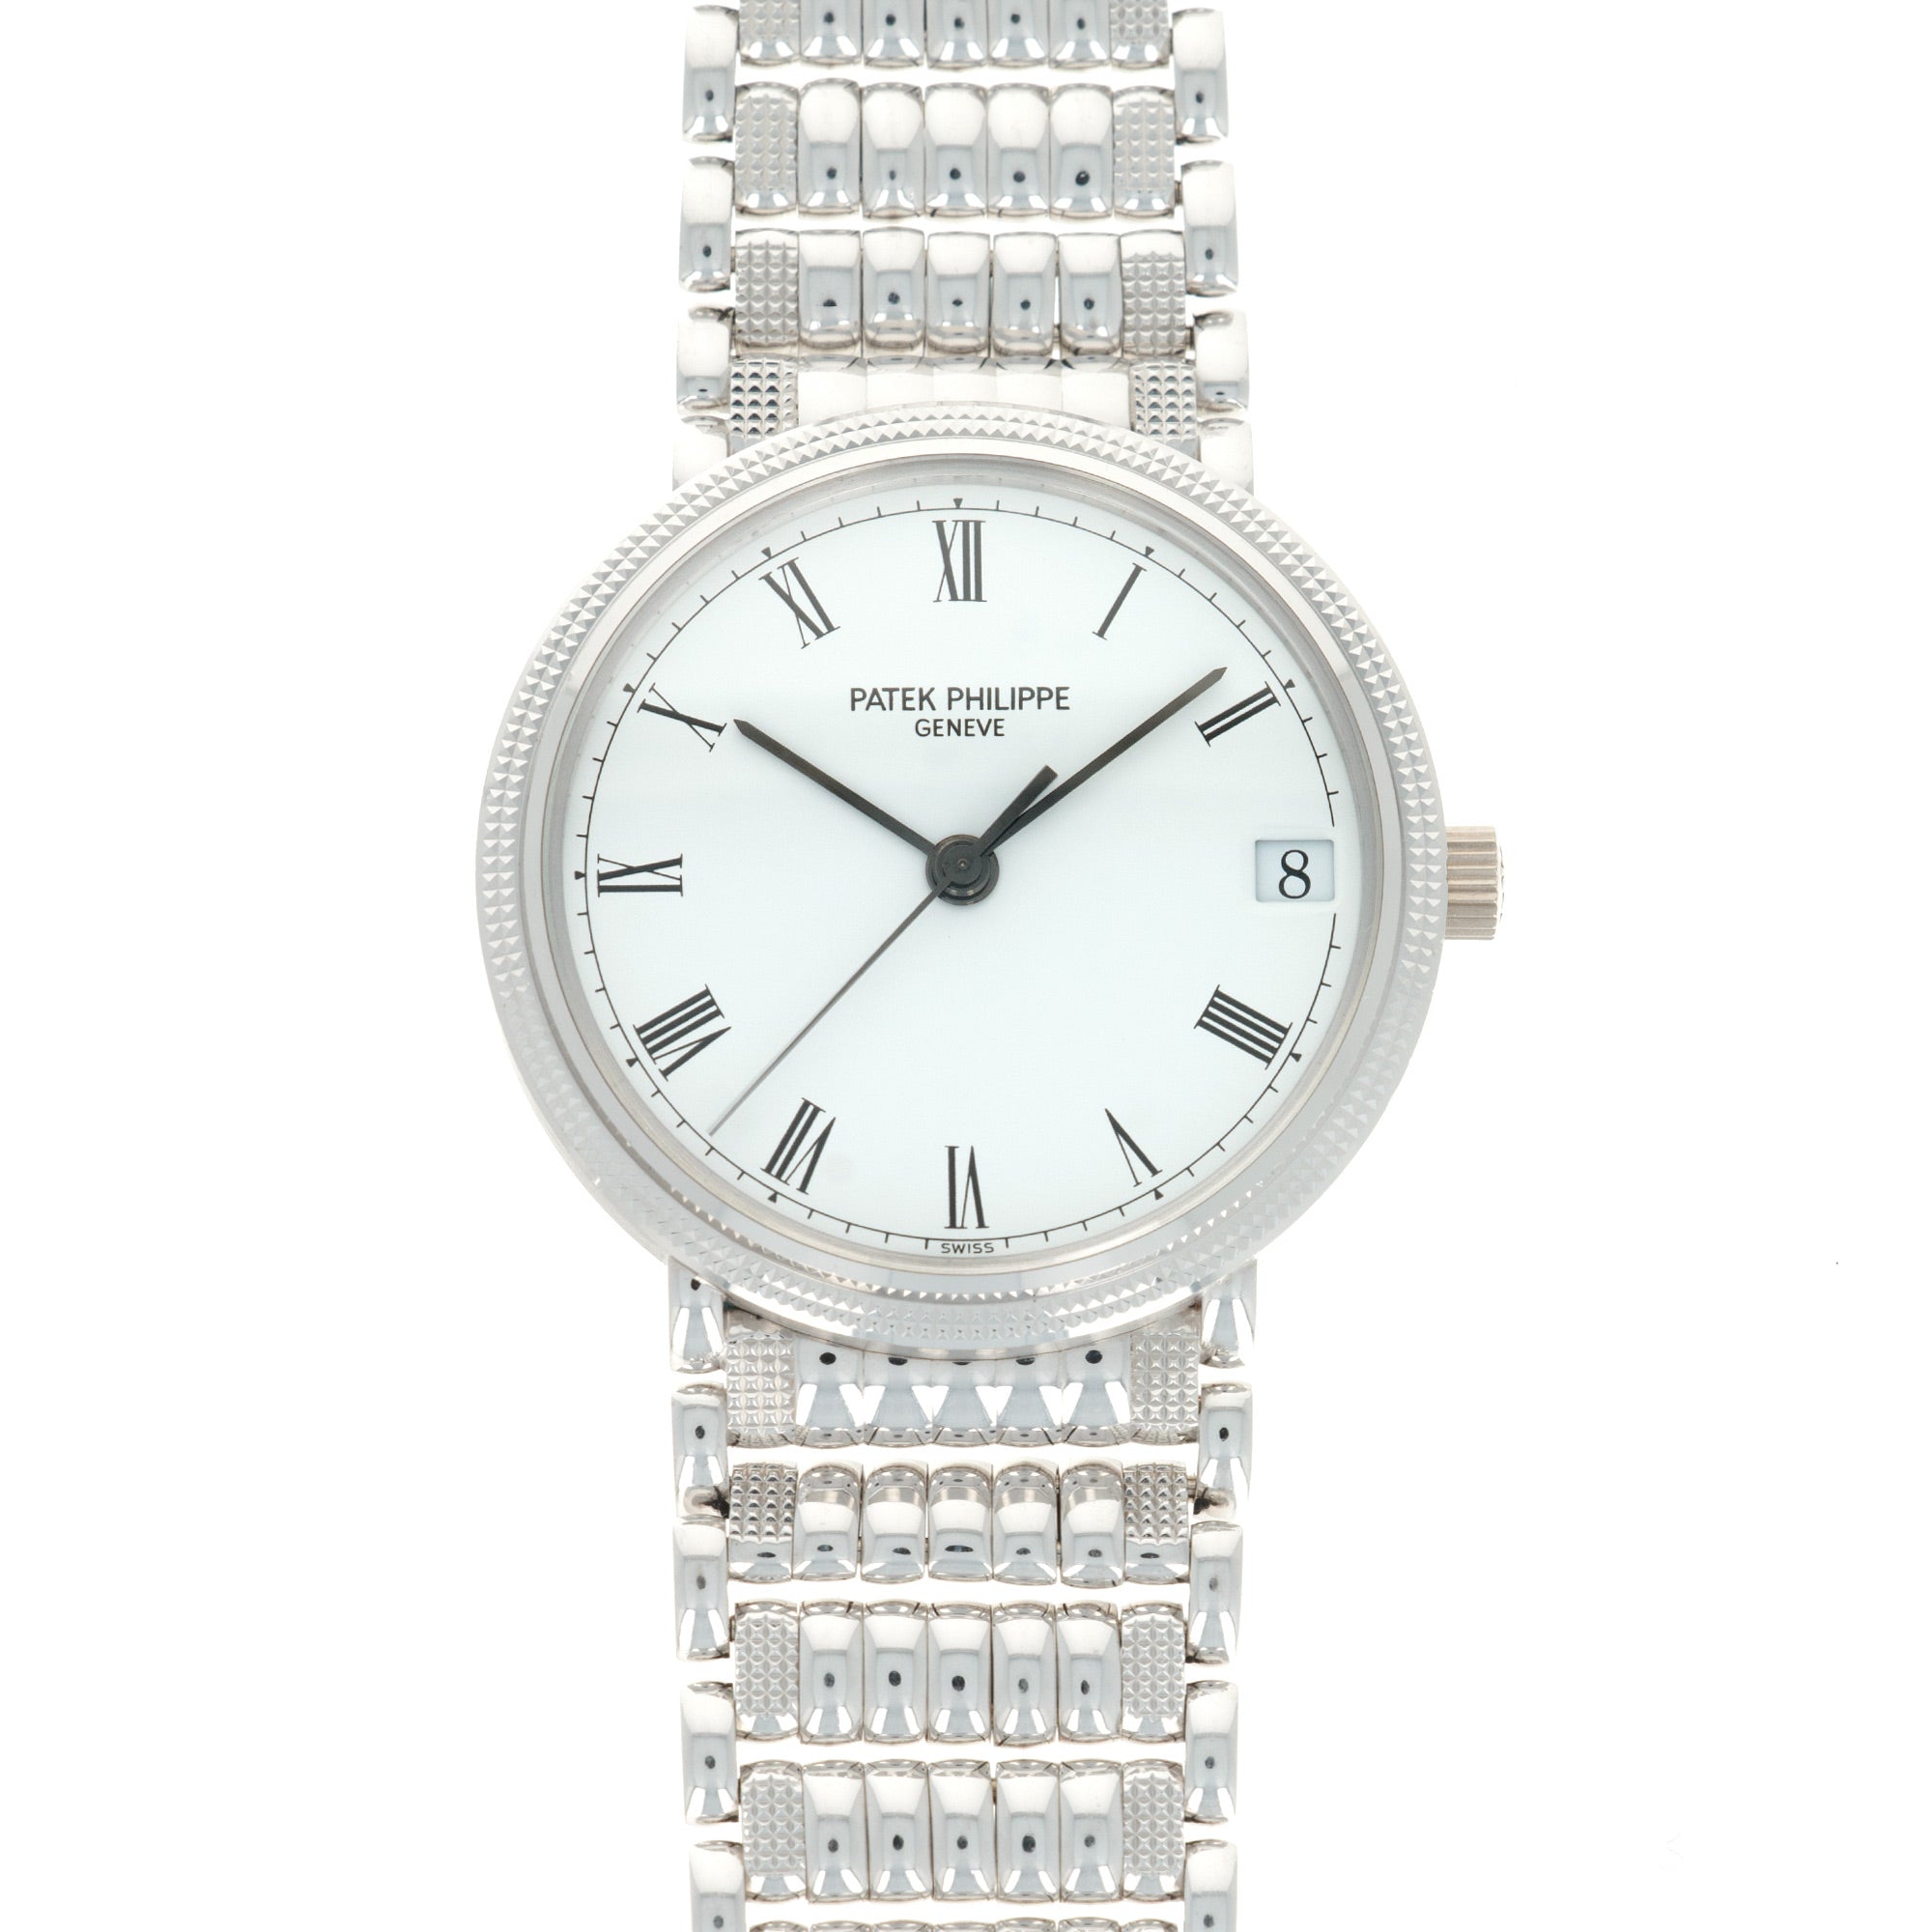 Patek Philippe - Patek Philippe White Gold Calatrava Watch Ref. 3802 with Unusual Bracelet - The Keystone Watches